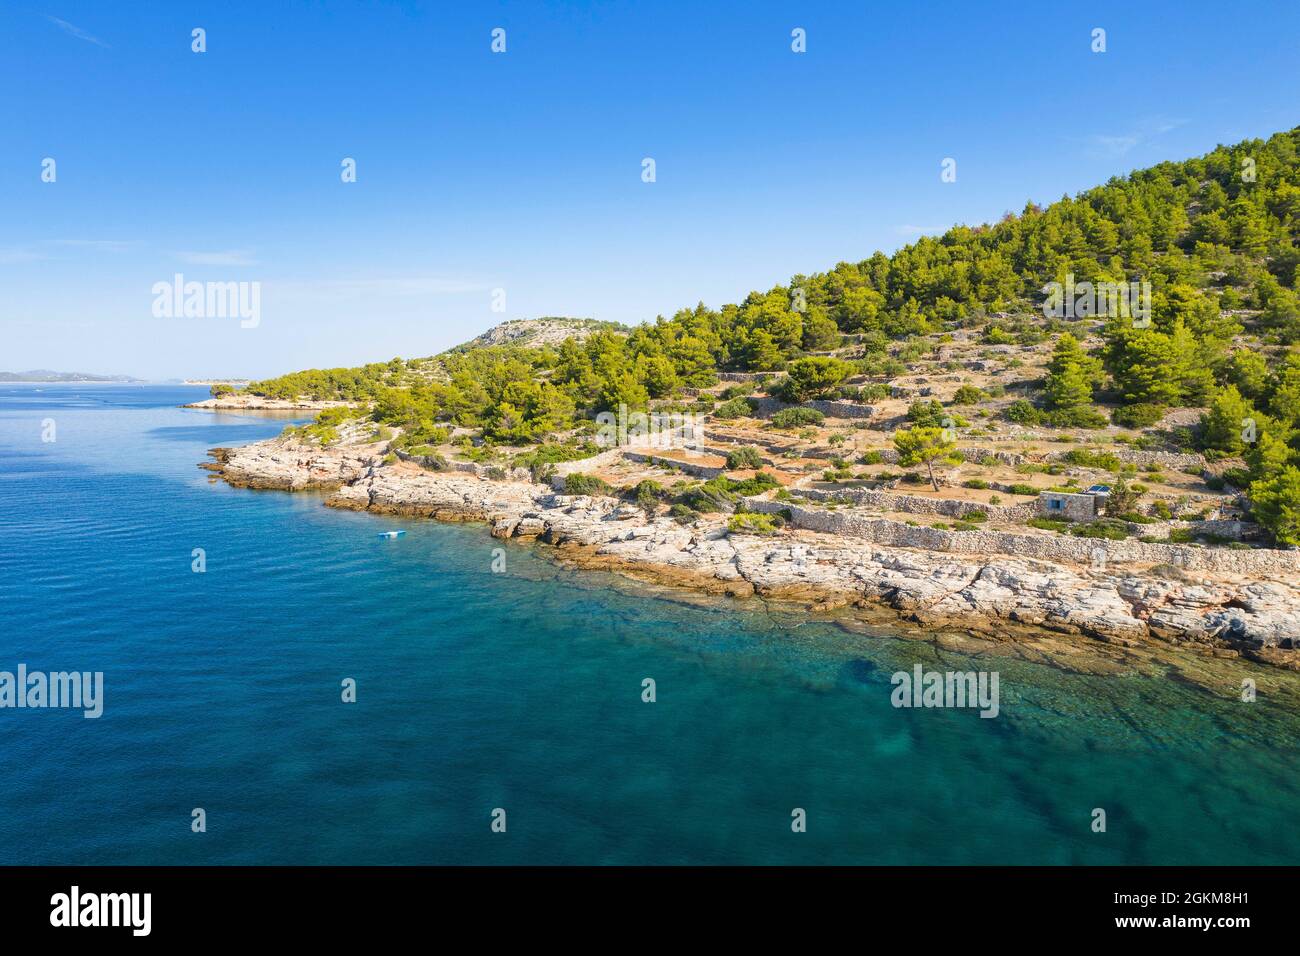 Shore of Murter island archipelago, aerial view, Dalmatia, Croatia Stock Photo